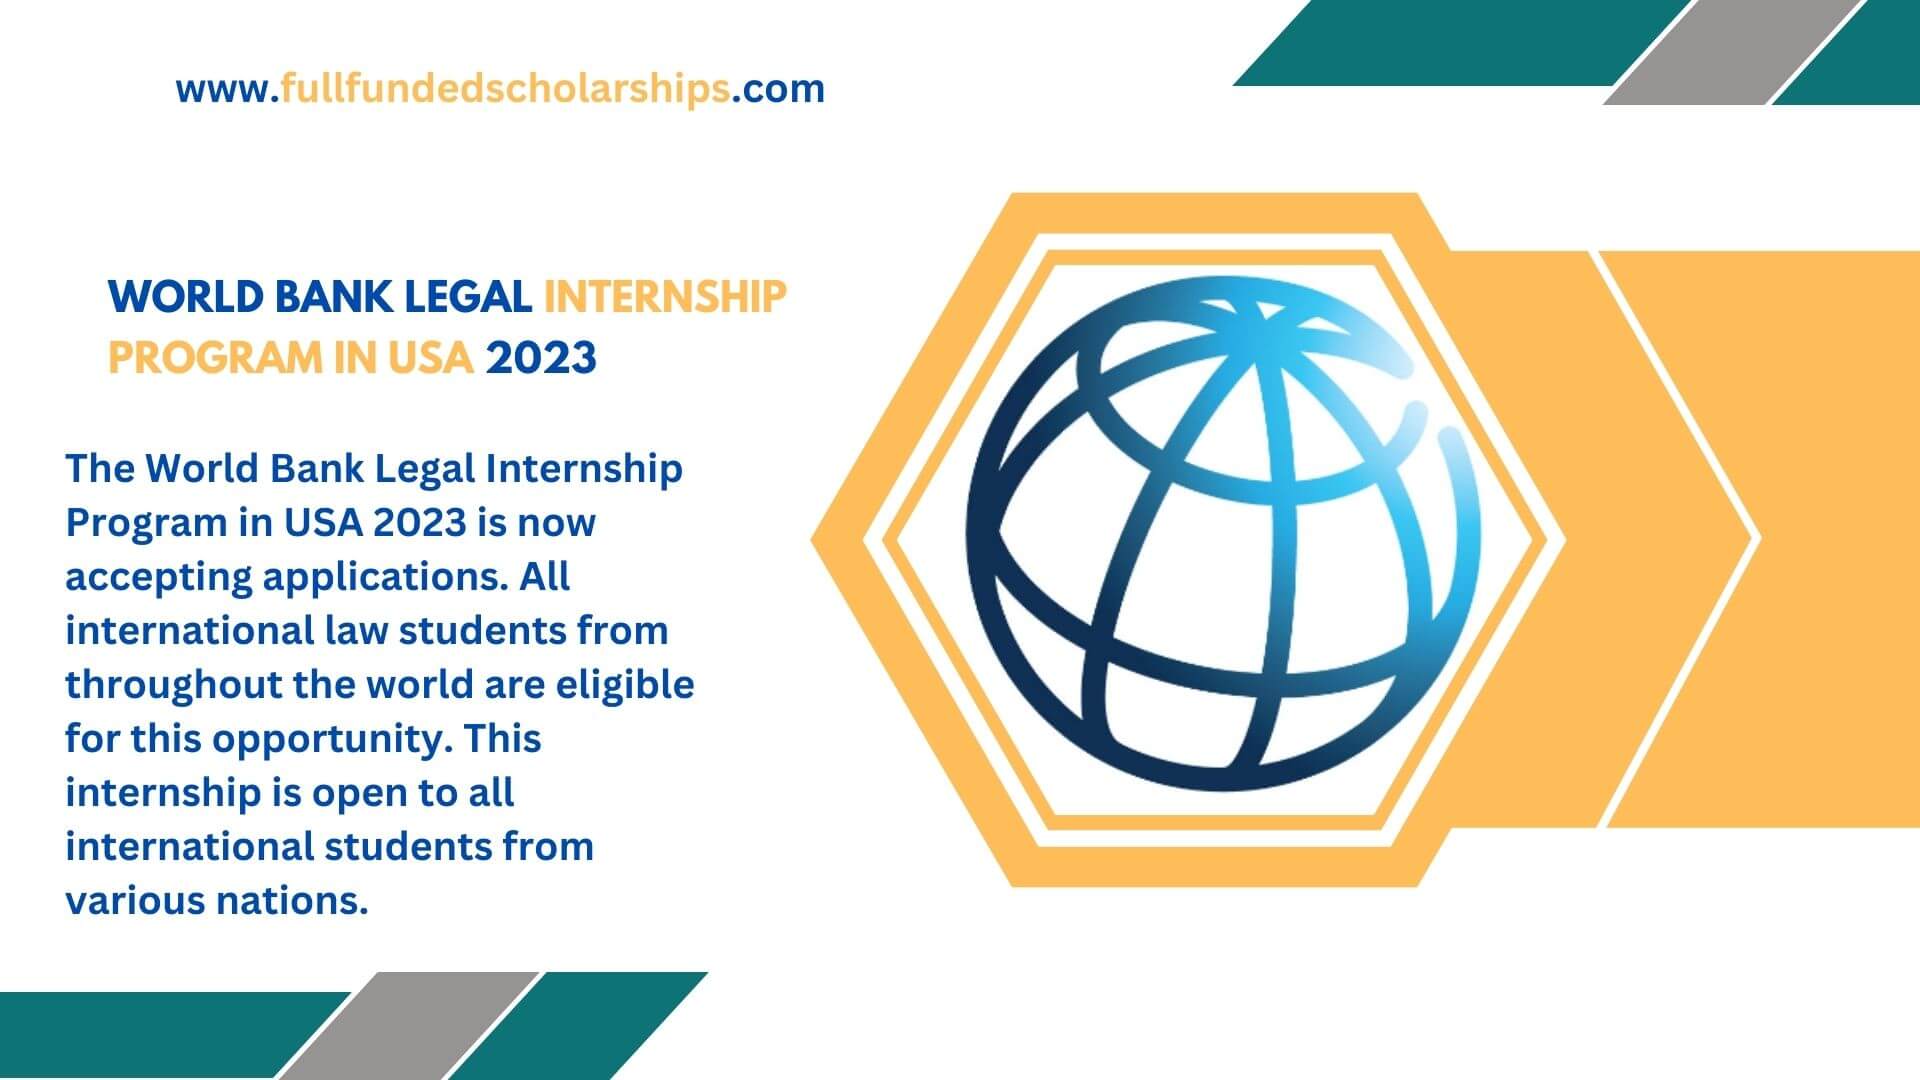 World Bank Legal Internship Program in USA 2023 